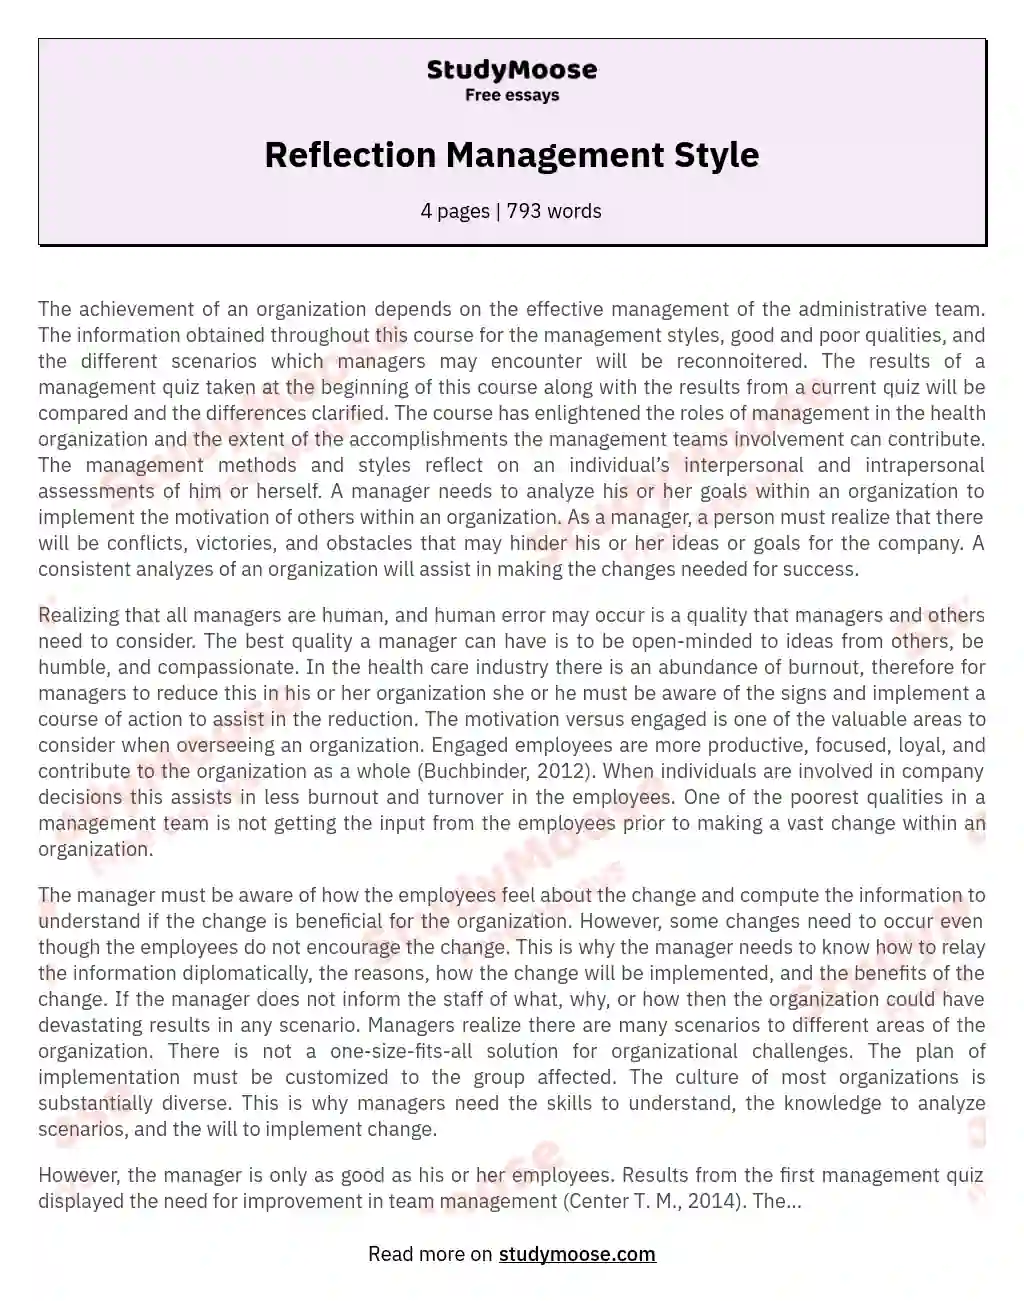 Reflection Management Style essay